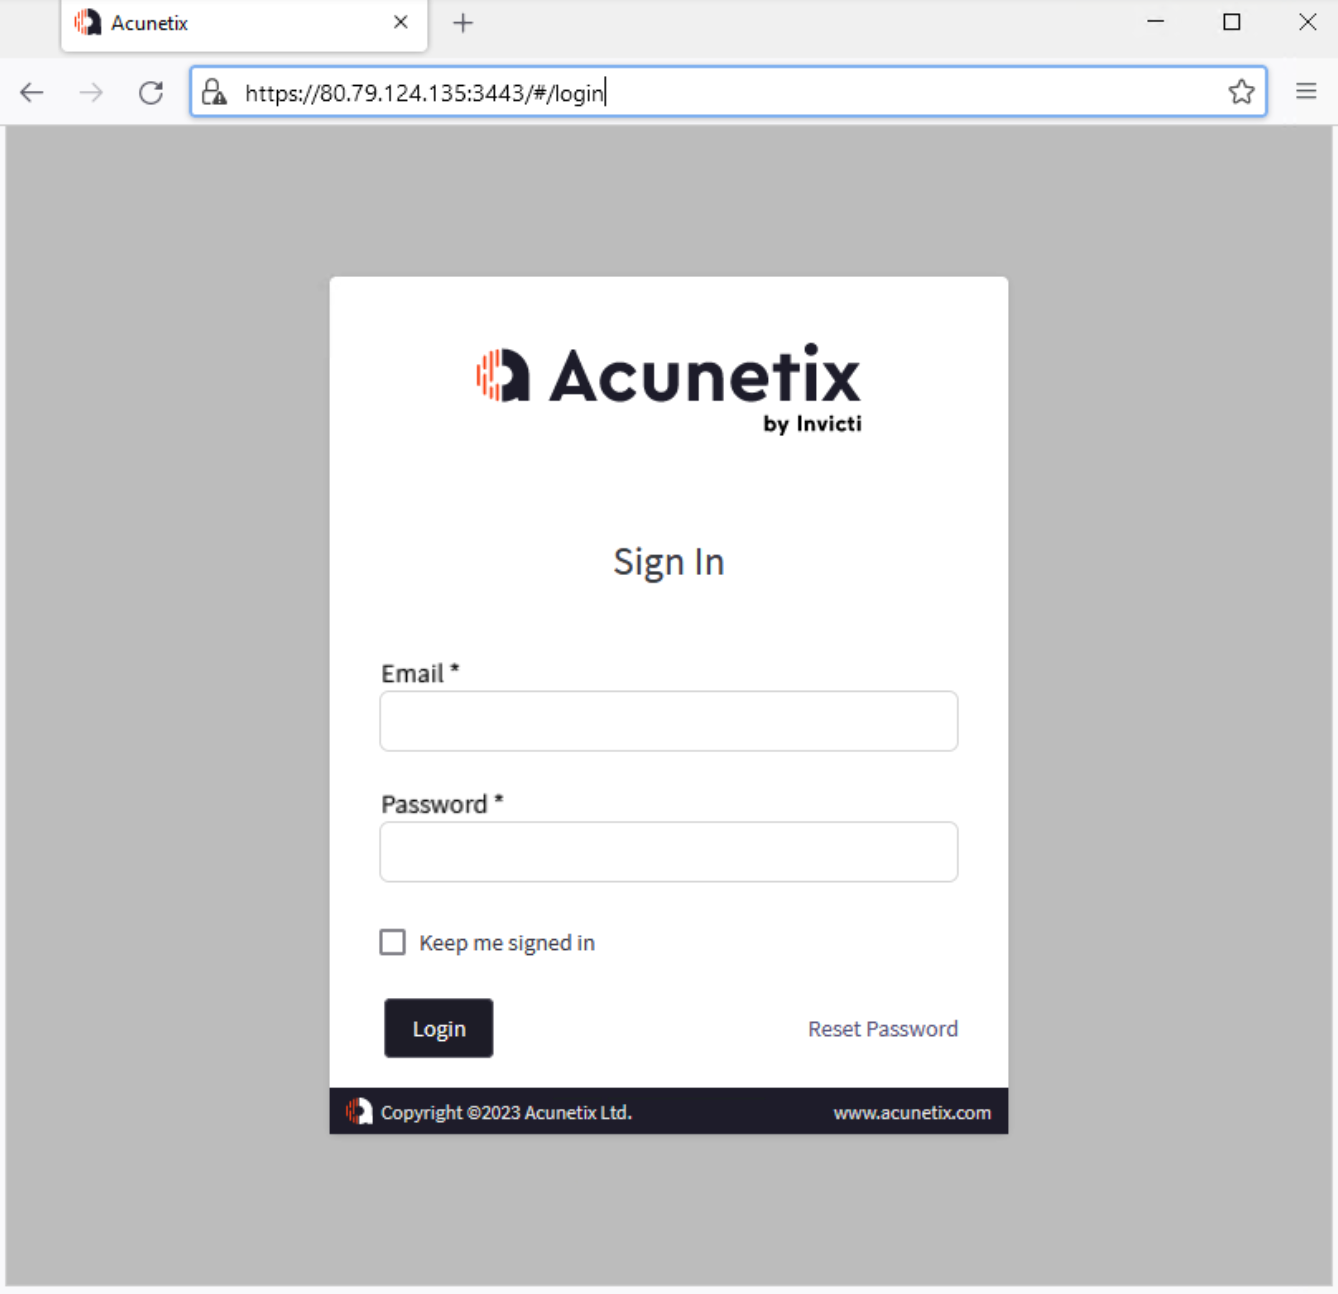 Acunetix Vulnerability Scanner Login